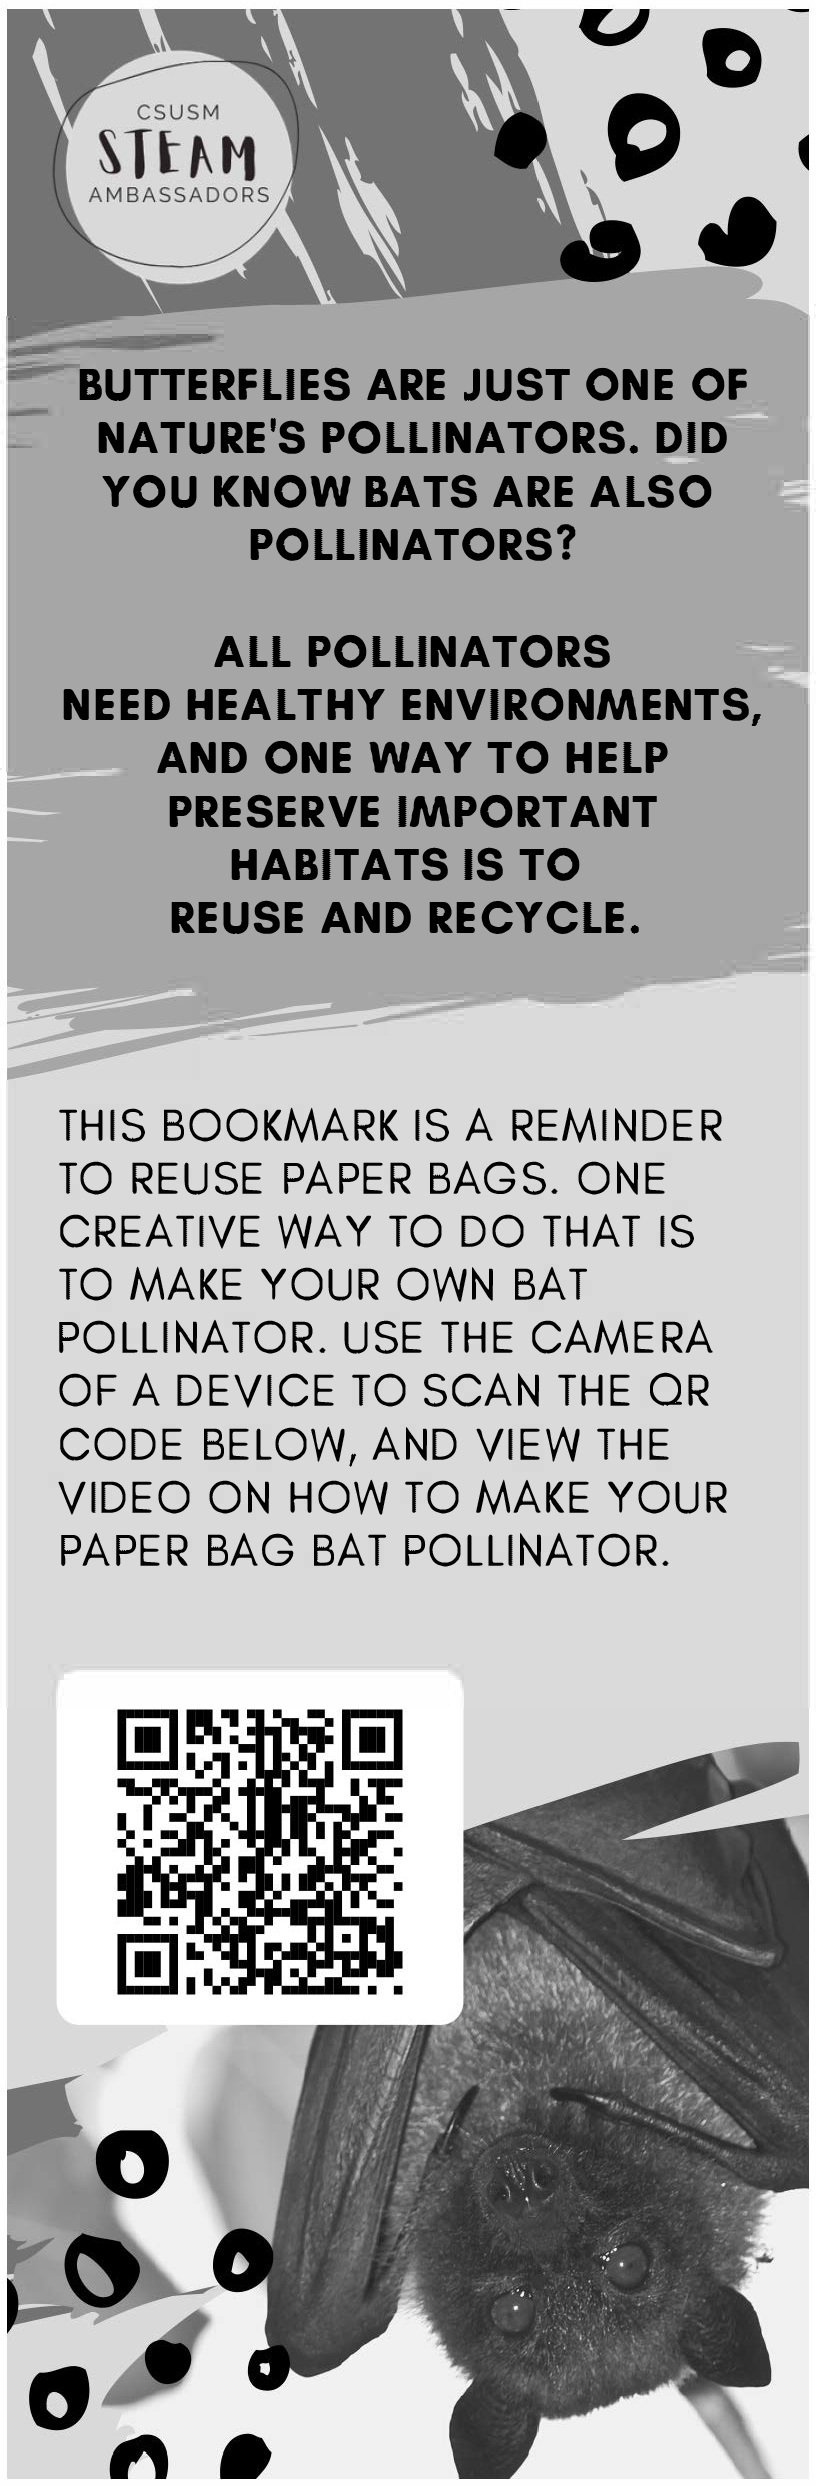 pollinator bat bookmark with QR code